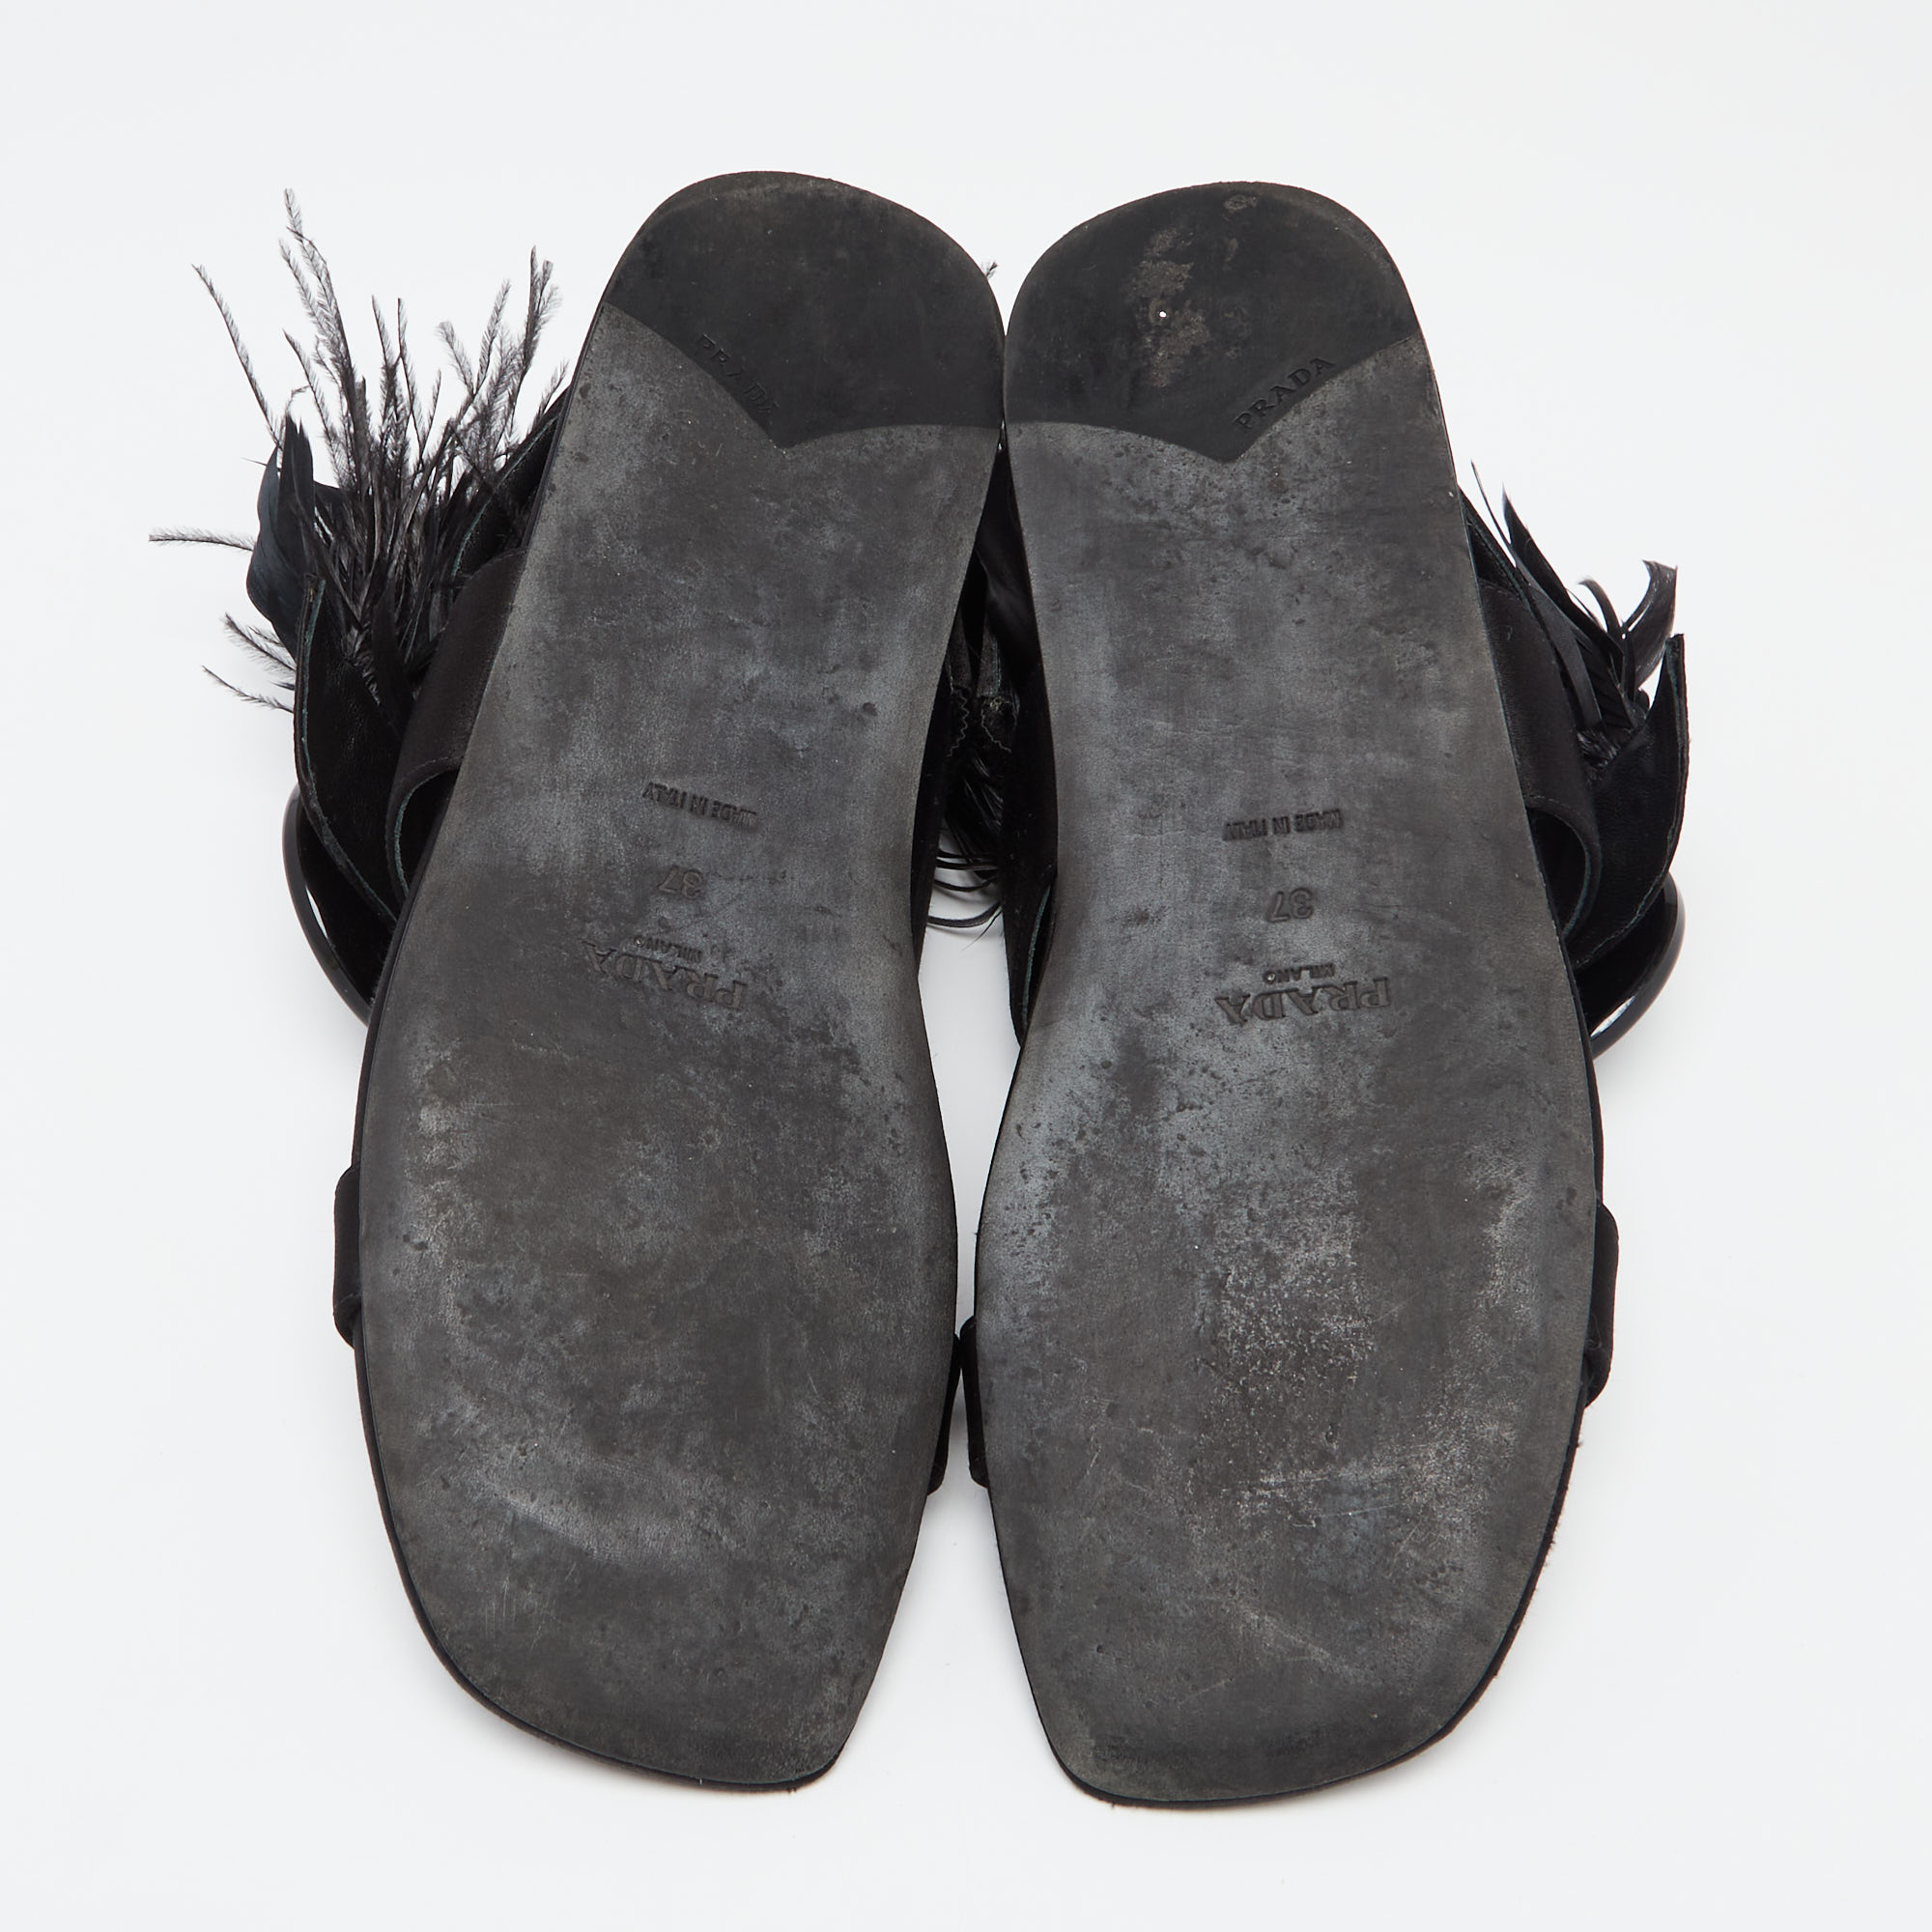 Prada Black Satin And Ostrich Feather Trim Slingback Flat Sandals Size 37